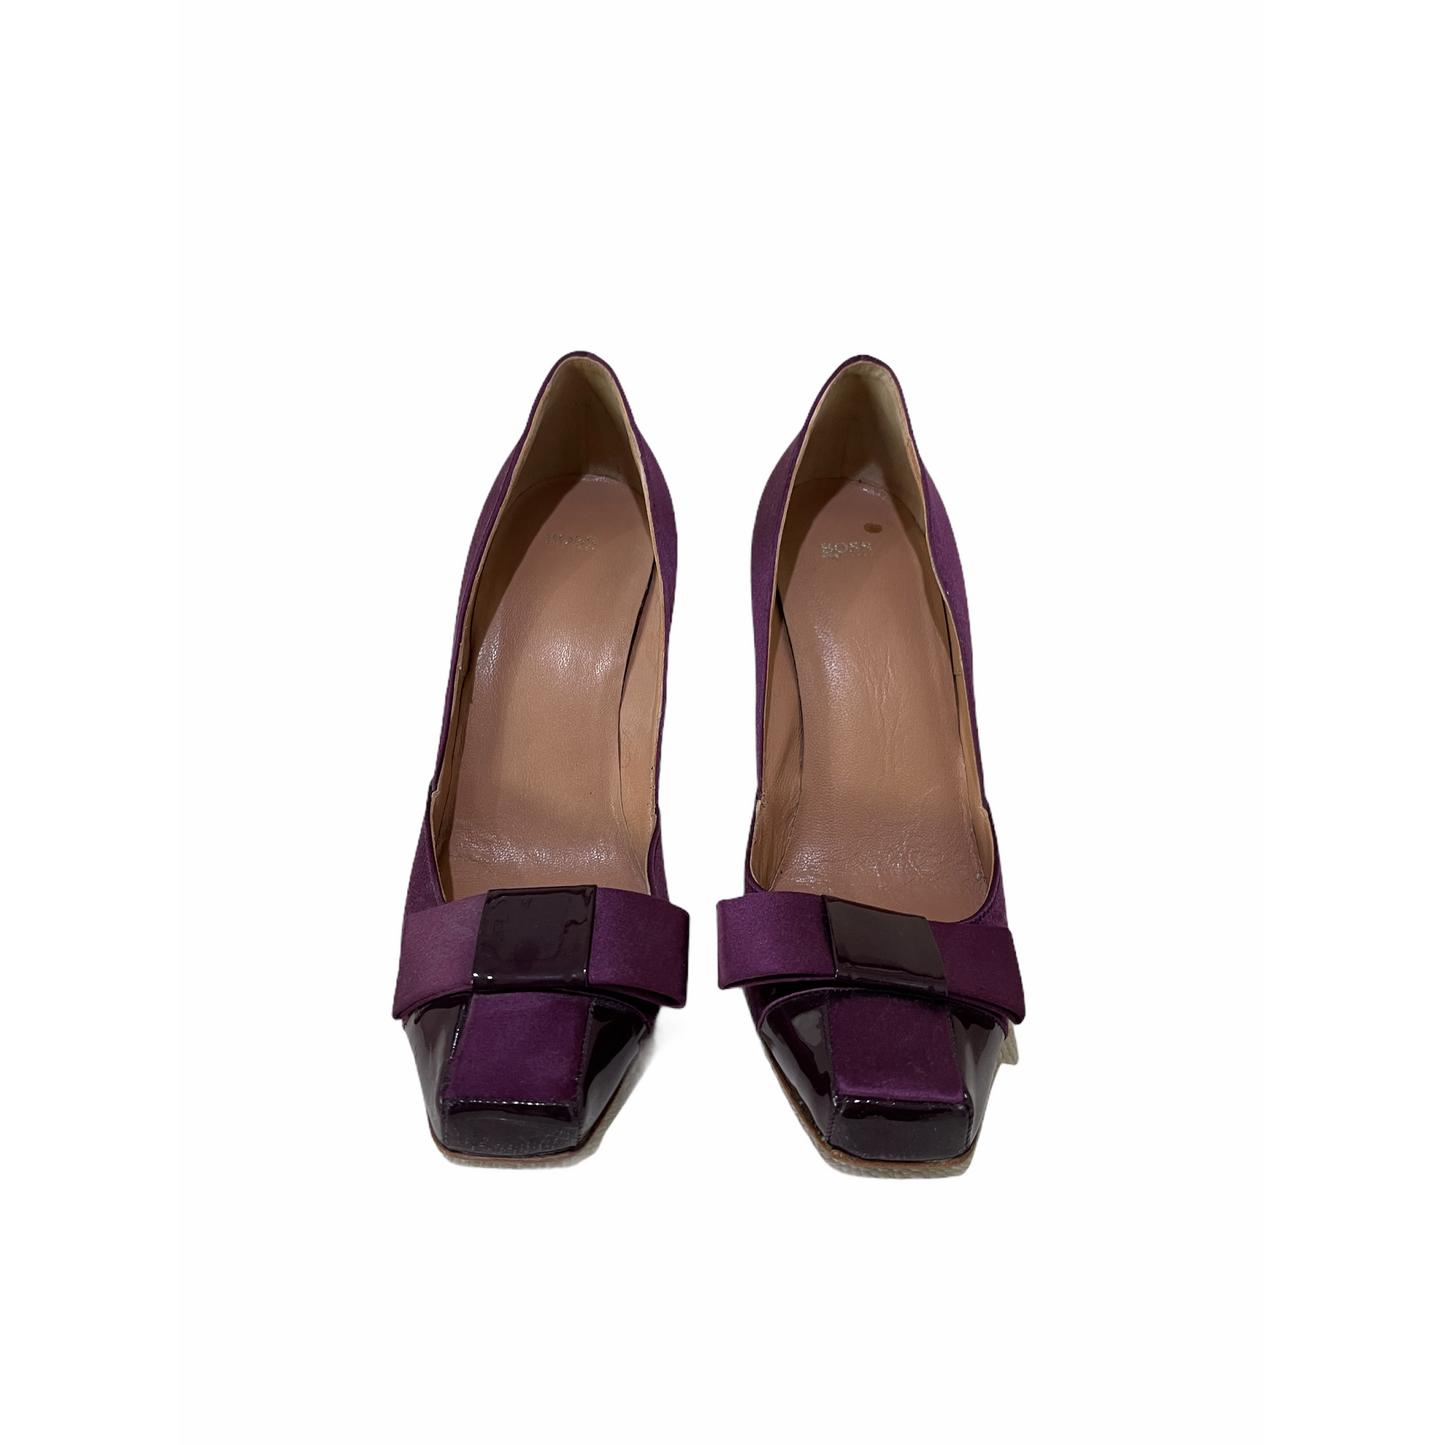 Heels (Pumps)-Purple Colored- By Hugo Boss